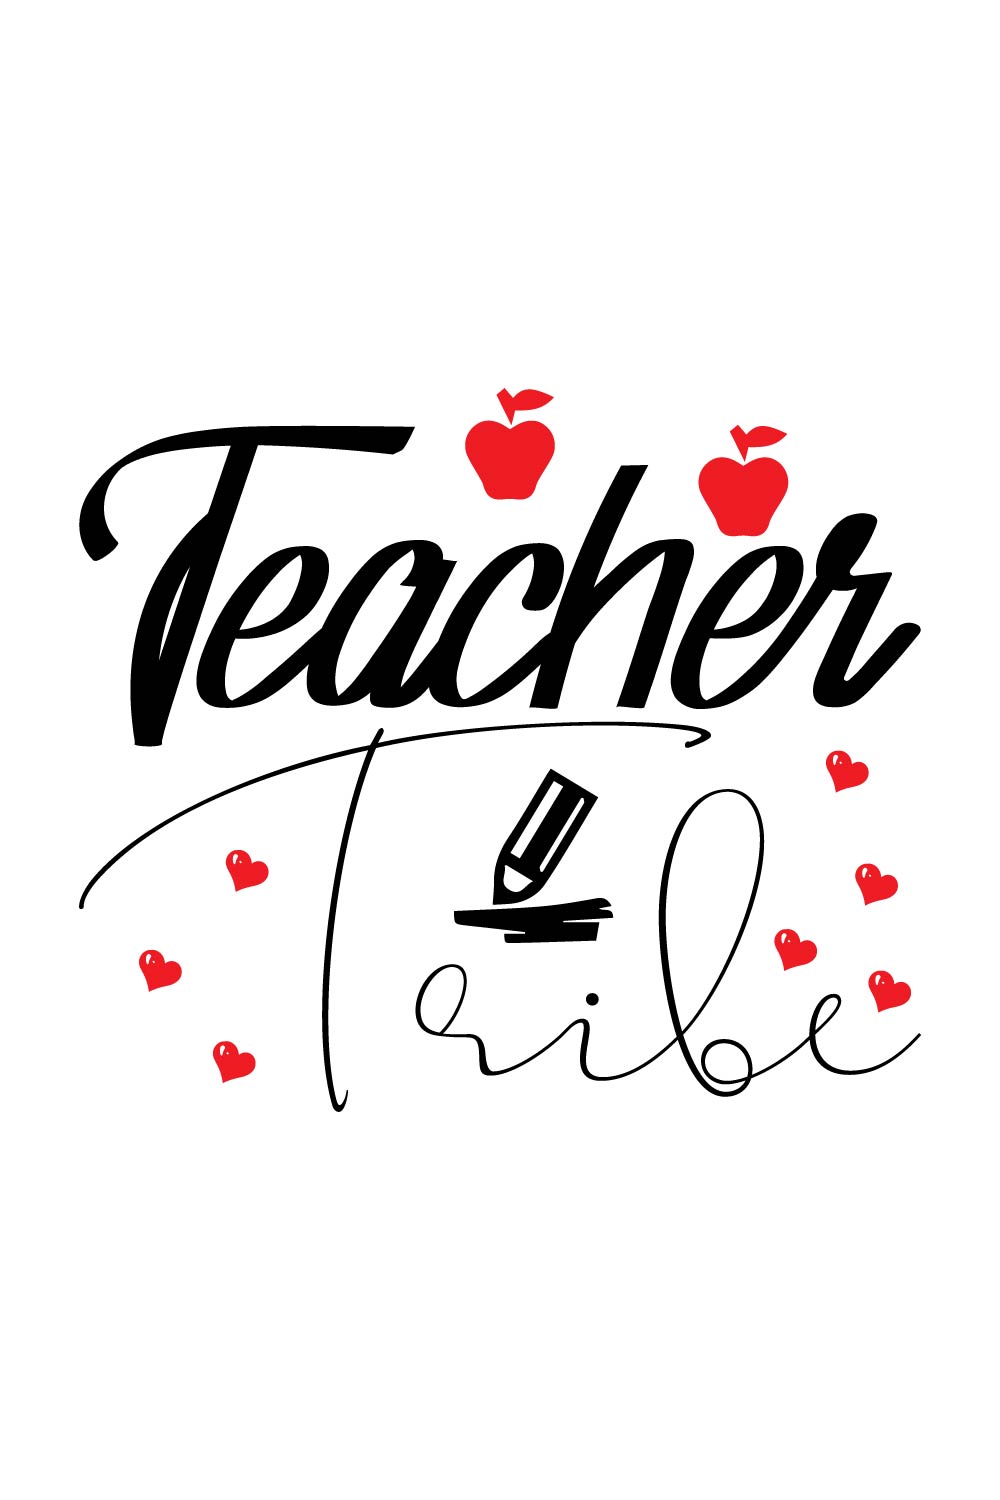 Teacher Tribe pinterest preview image.